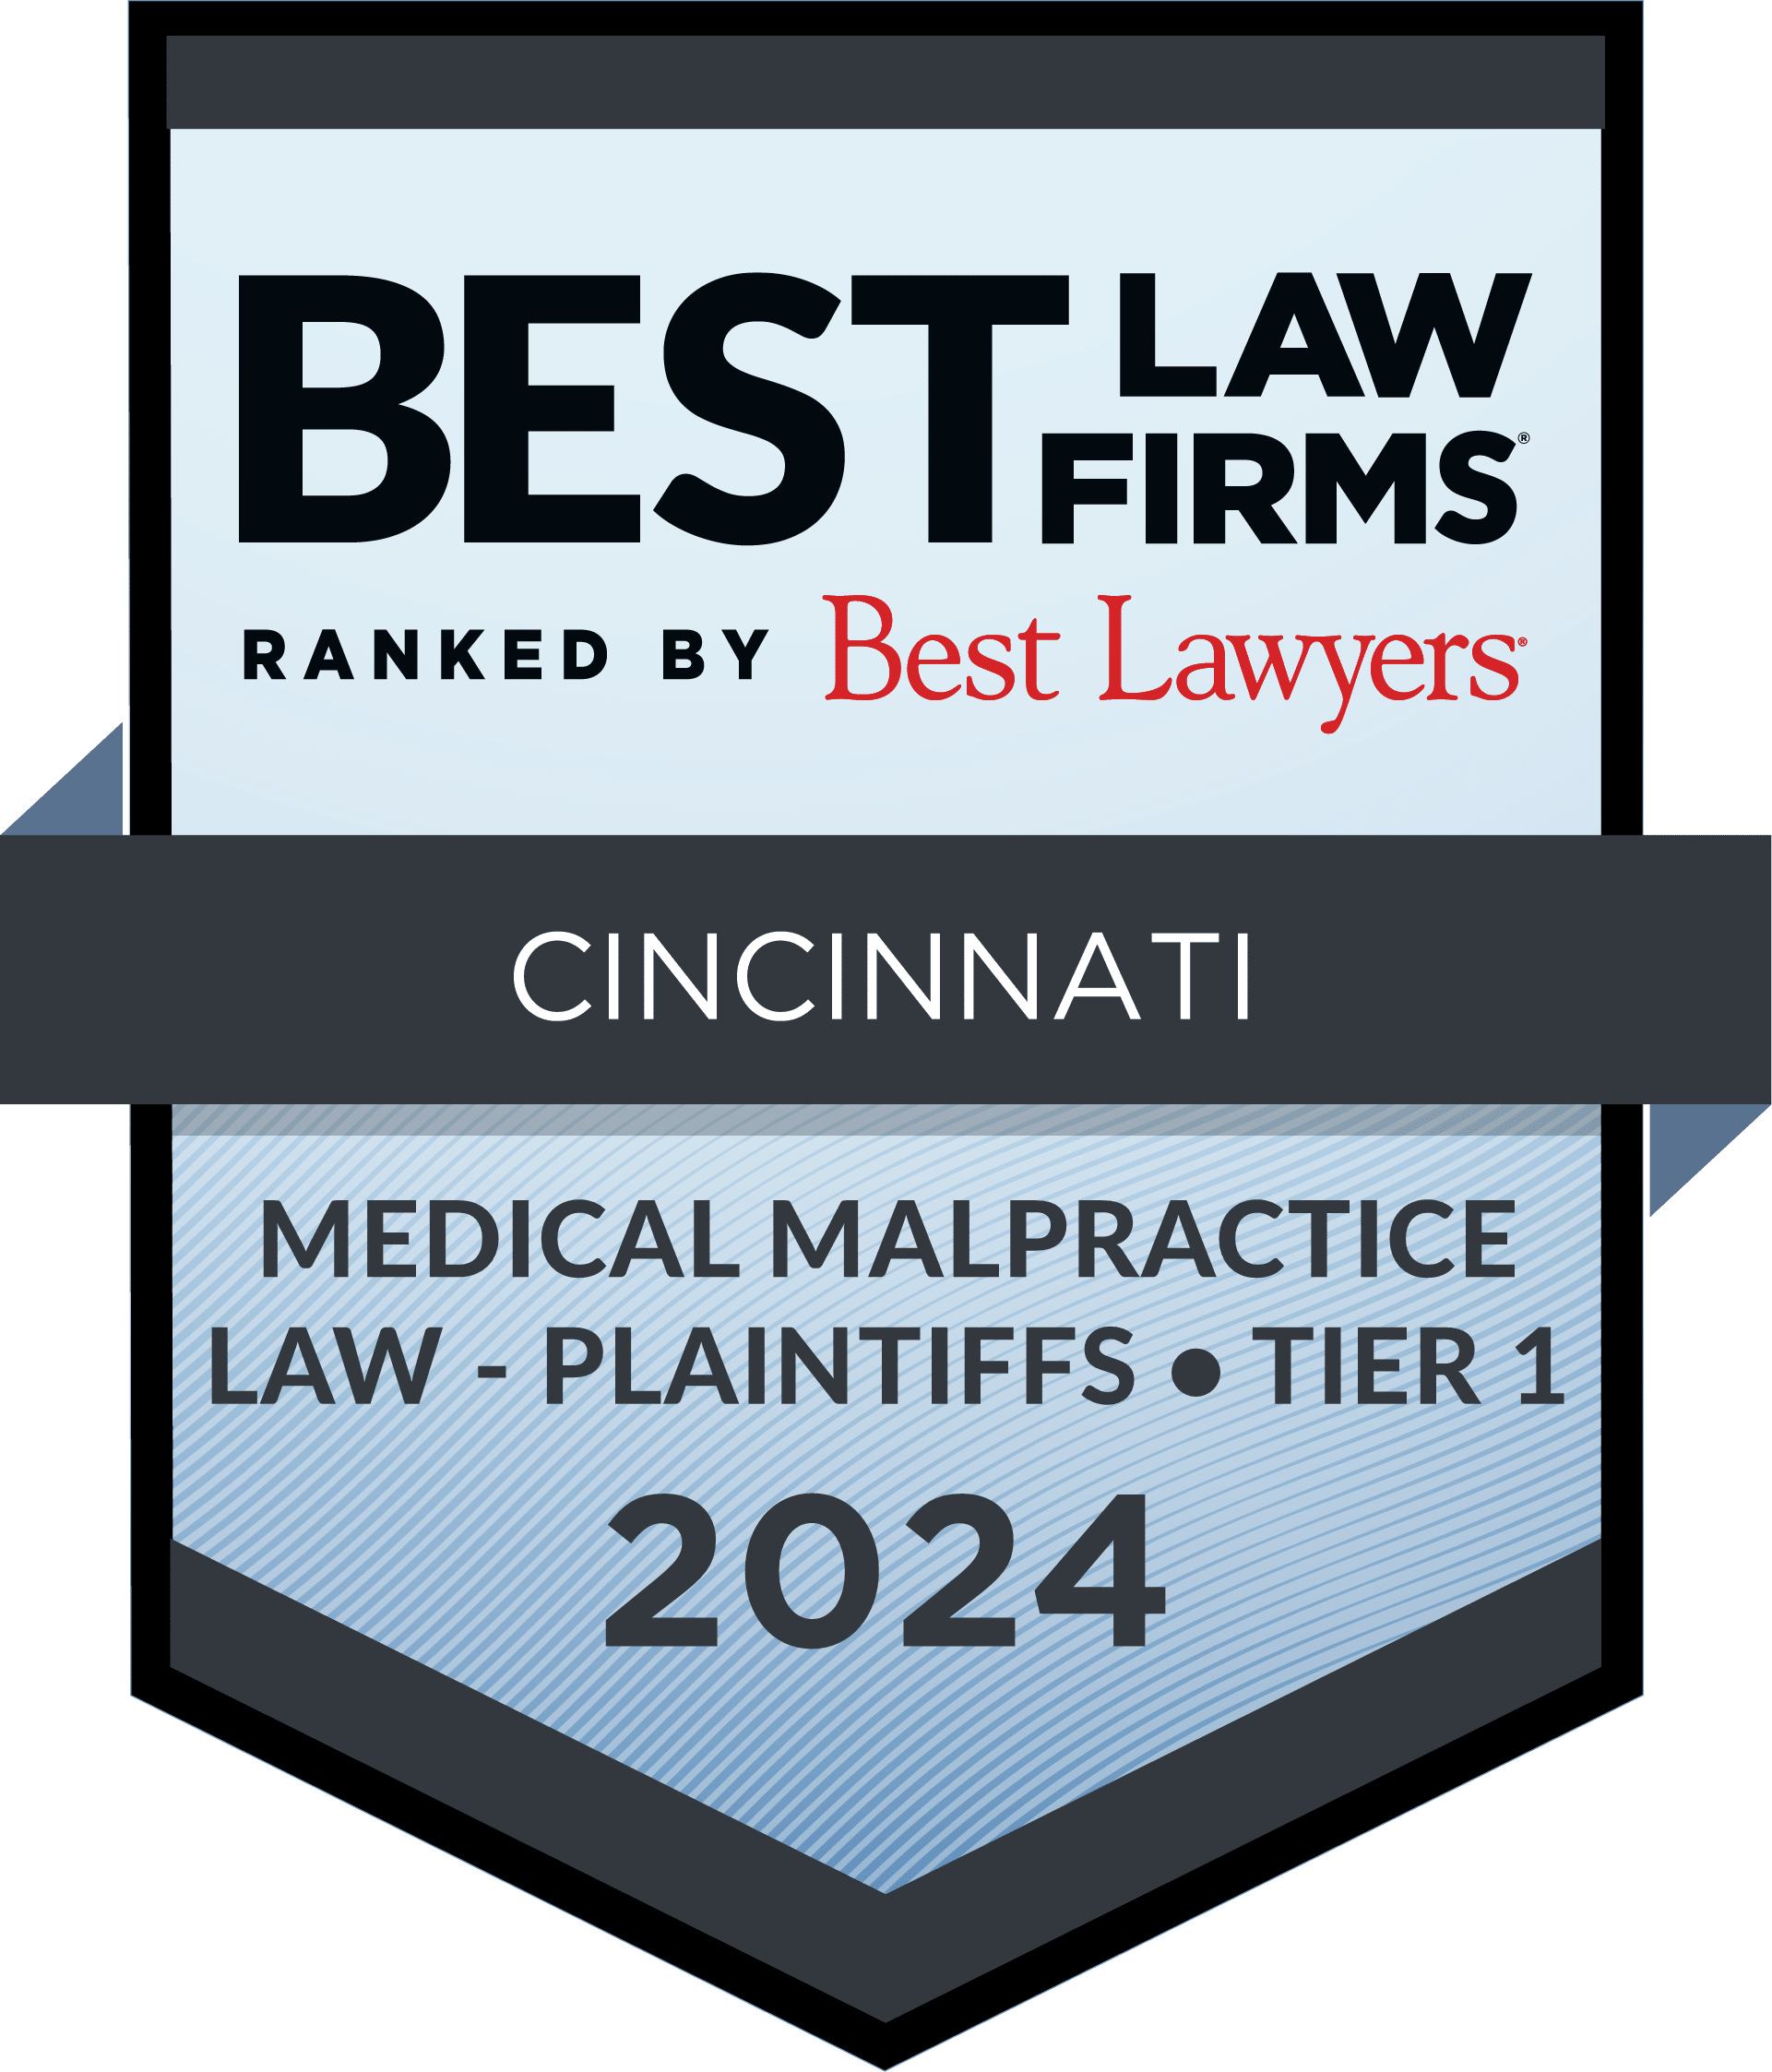 Best Law Firms - Cincinnati Medical Malpractice Law Badge TLF